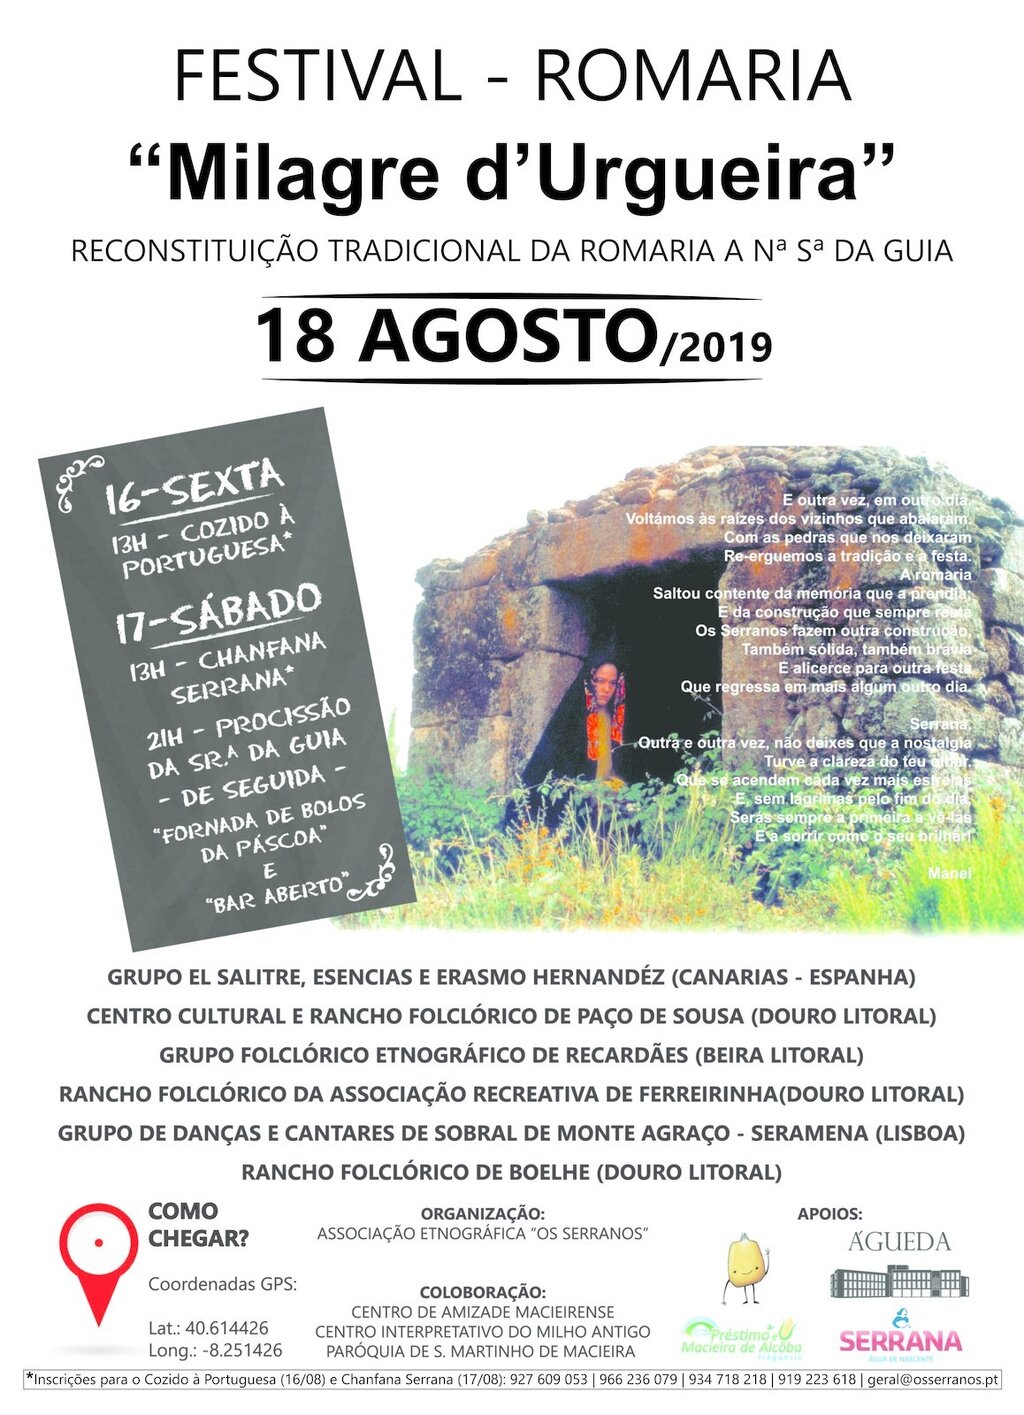 Festival - Romaria "Milagre d'Urgueira"